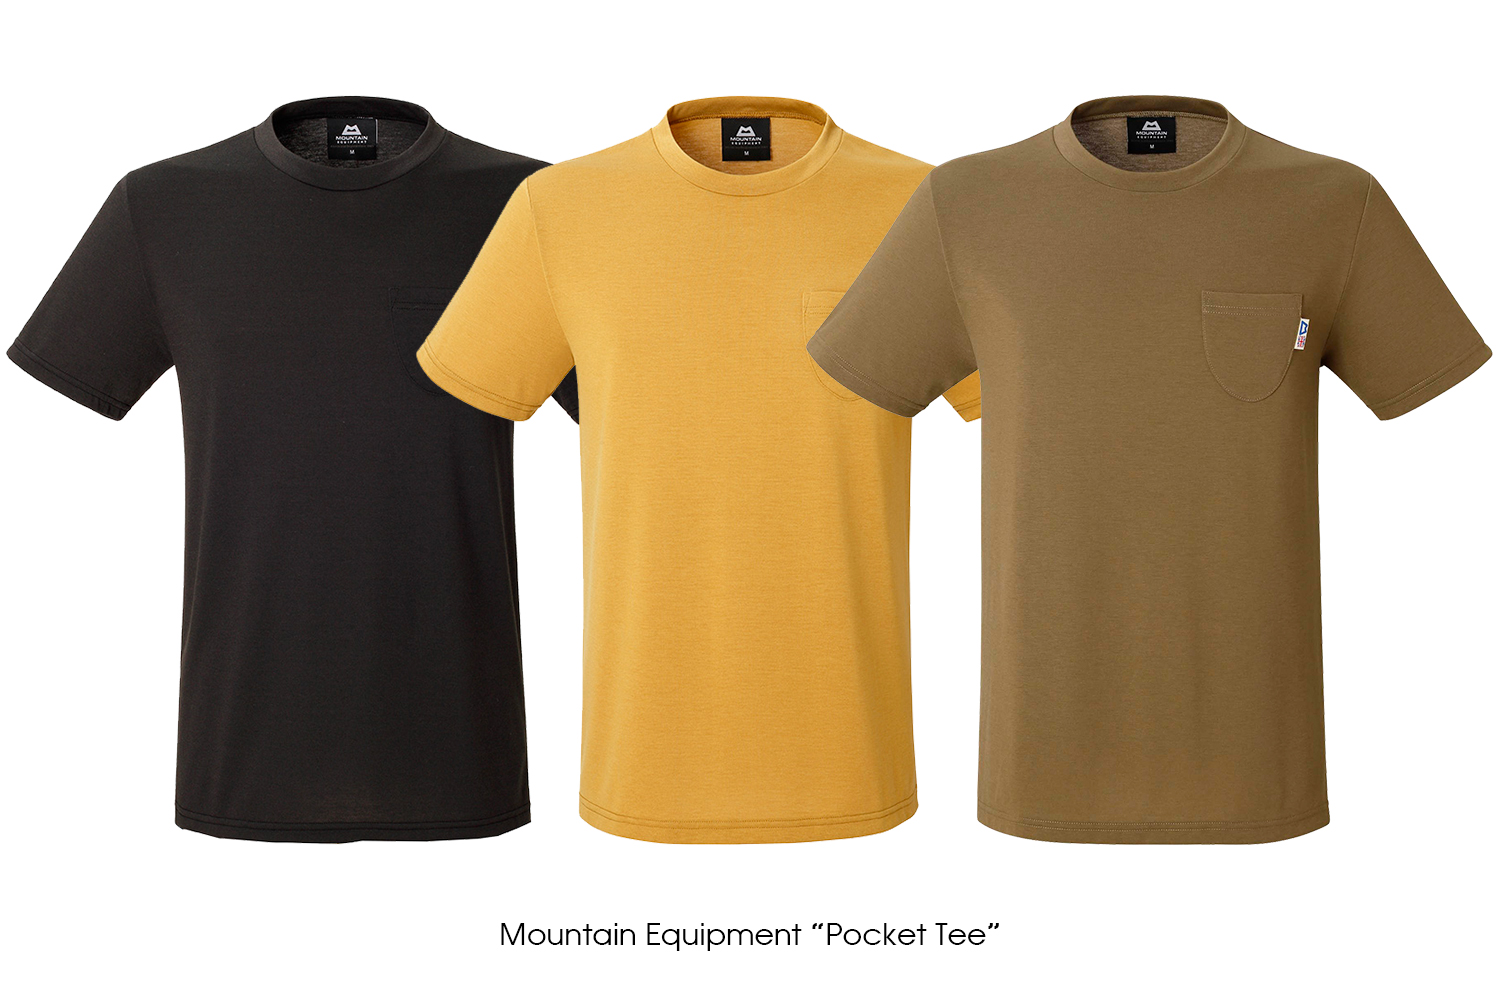 Mountain Equipment "Pocket Tee"